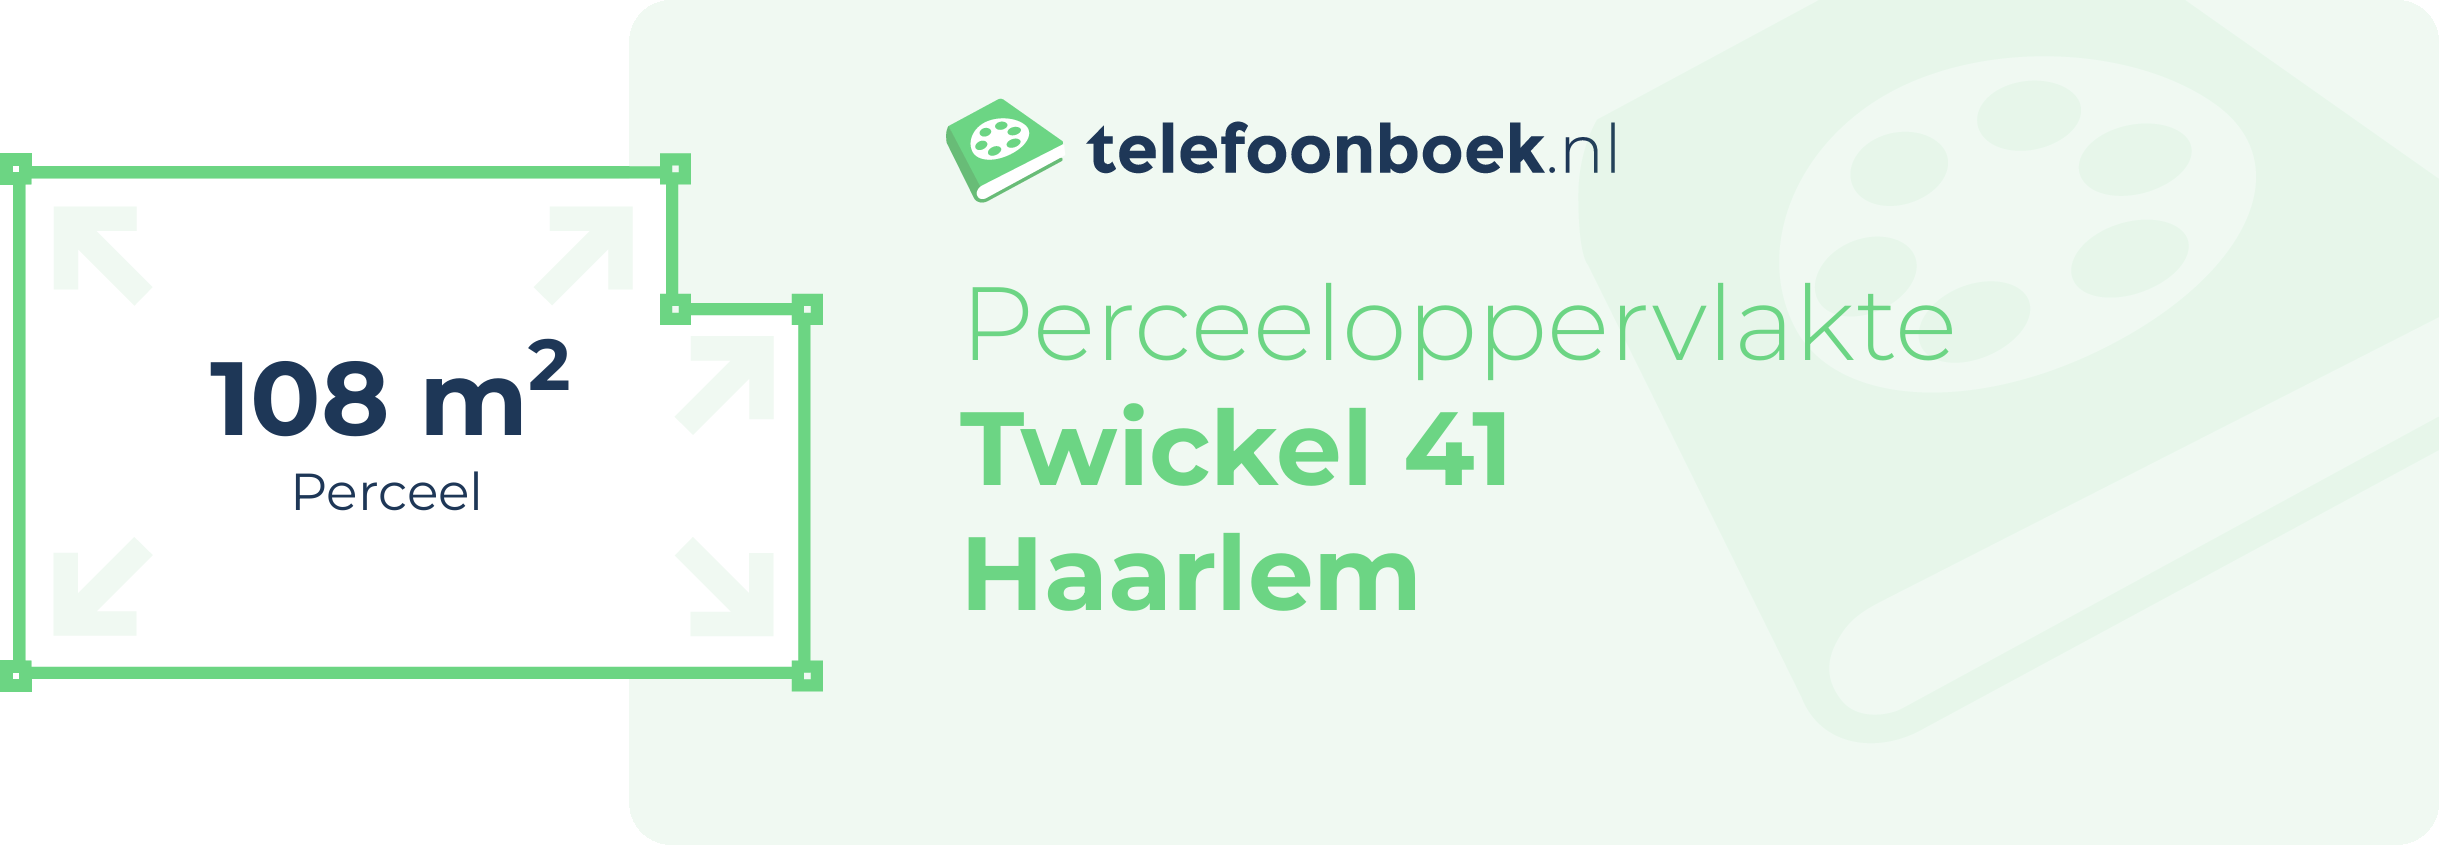 Perceeloppervlakte Twickel 41 Haarlem